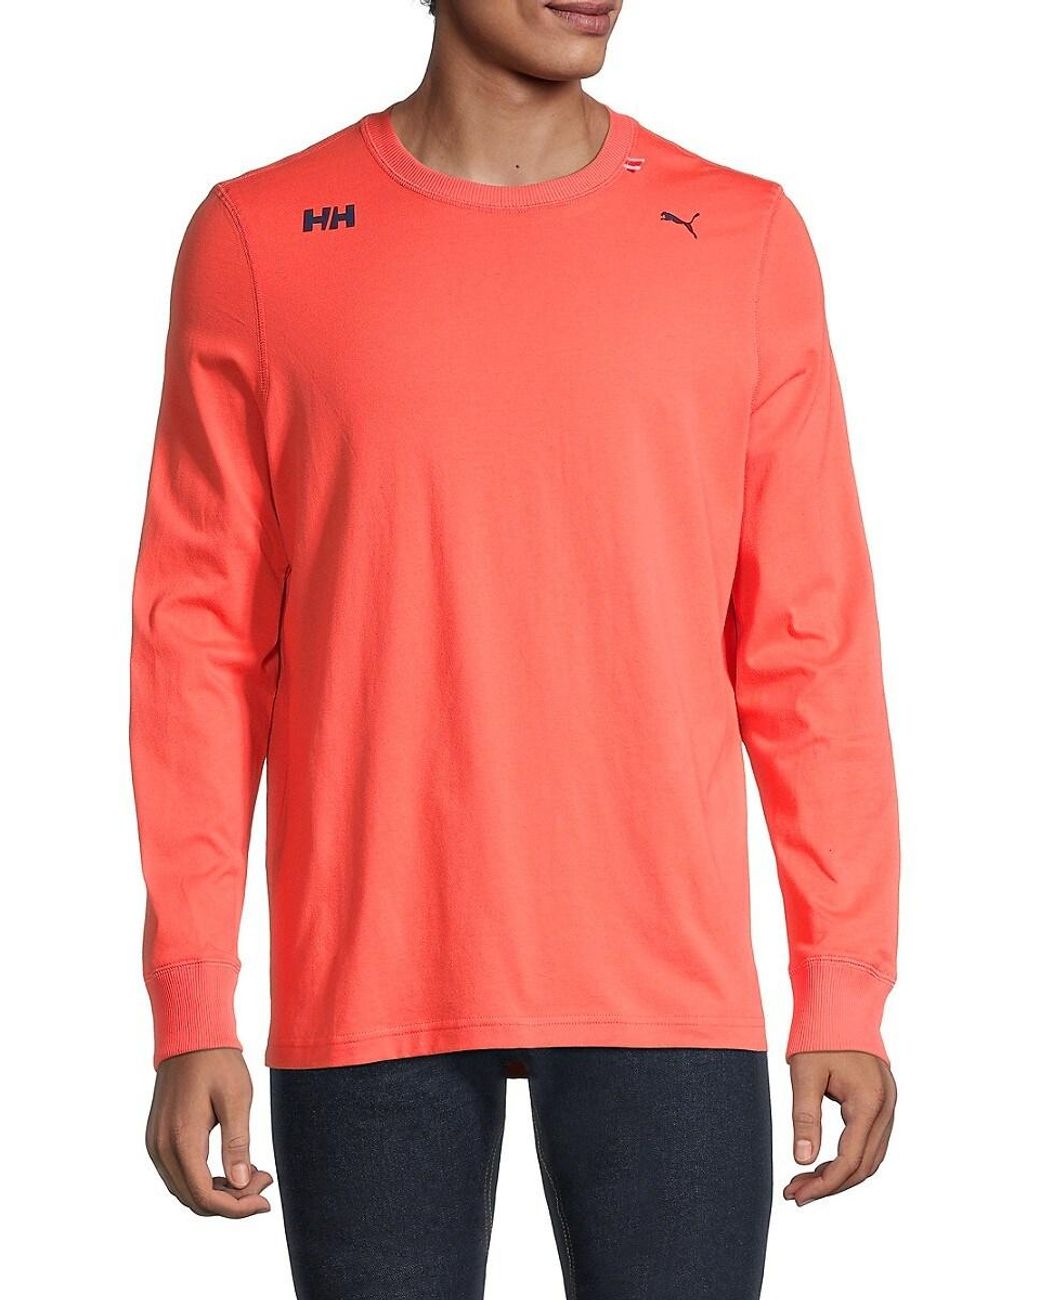 PUMA X Helly Hansen Long-sleeve T-shirt in Orange for Men - Save 34% | Lyst